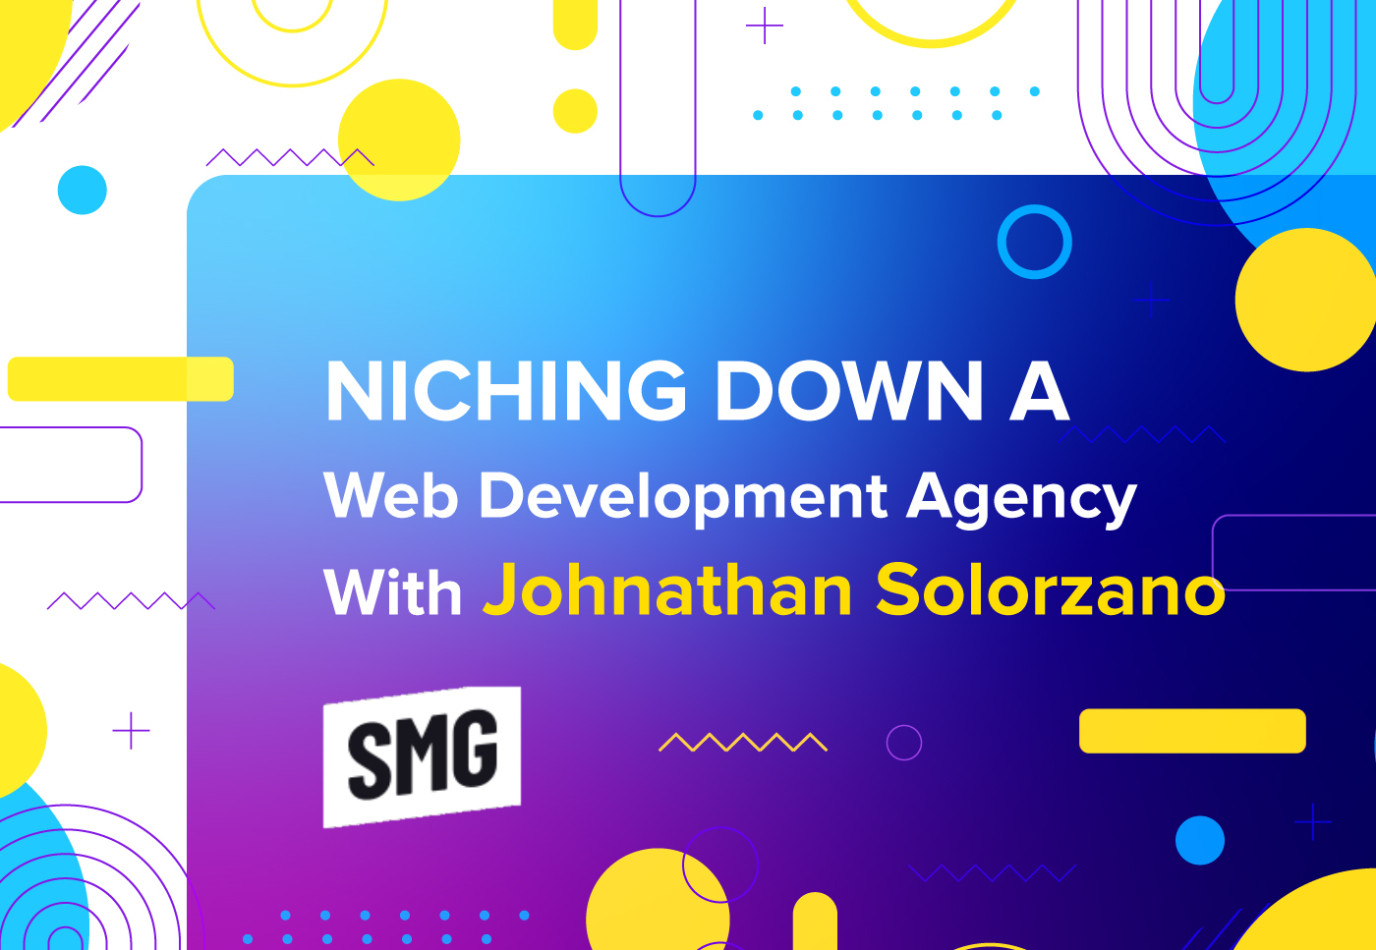 Niching Down a Web Development Agency With Johnathan Solorzano